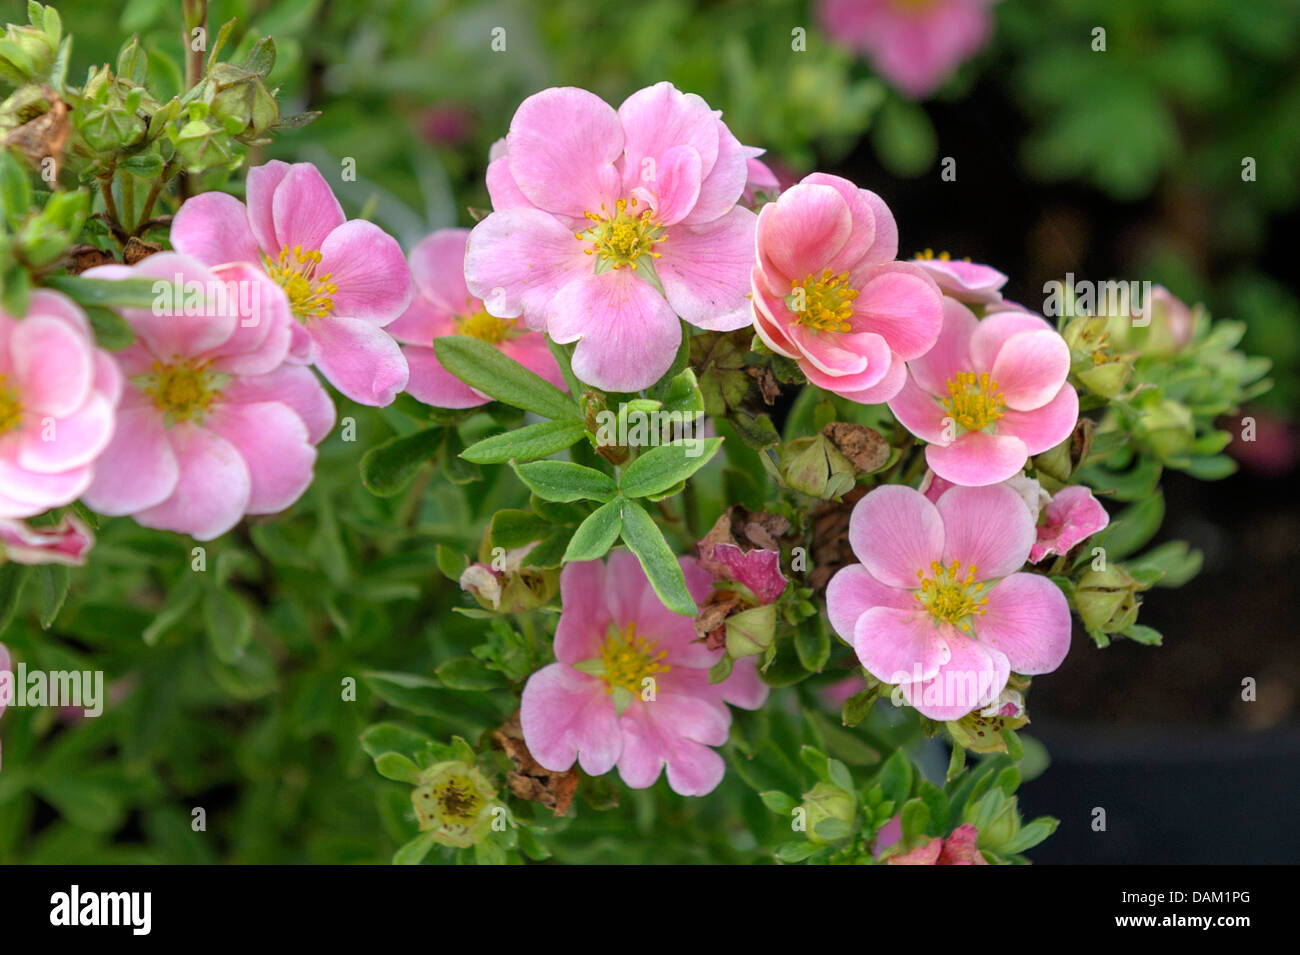 shrubby cinquefoil, yellow rose (Potentilla fruticosa 'Pink Paradise', Potentilla fruticosa Pink Paradise), cultivar Pink Paradise Stock Photo